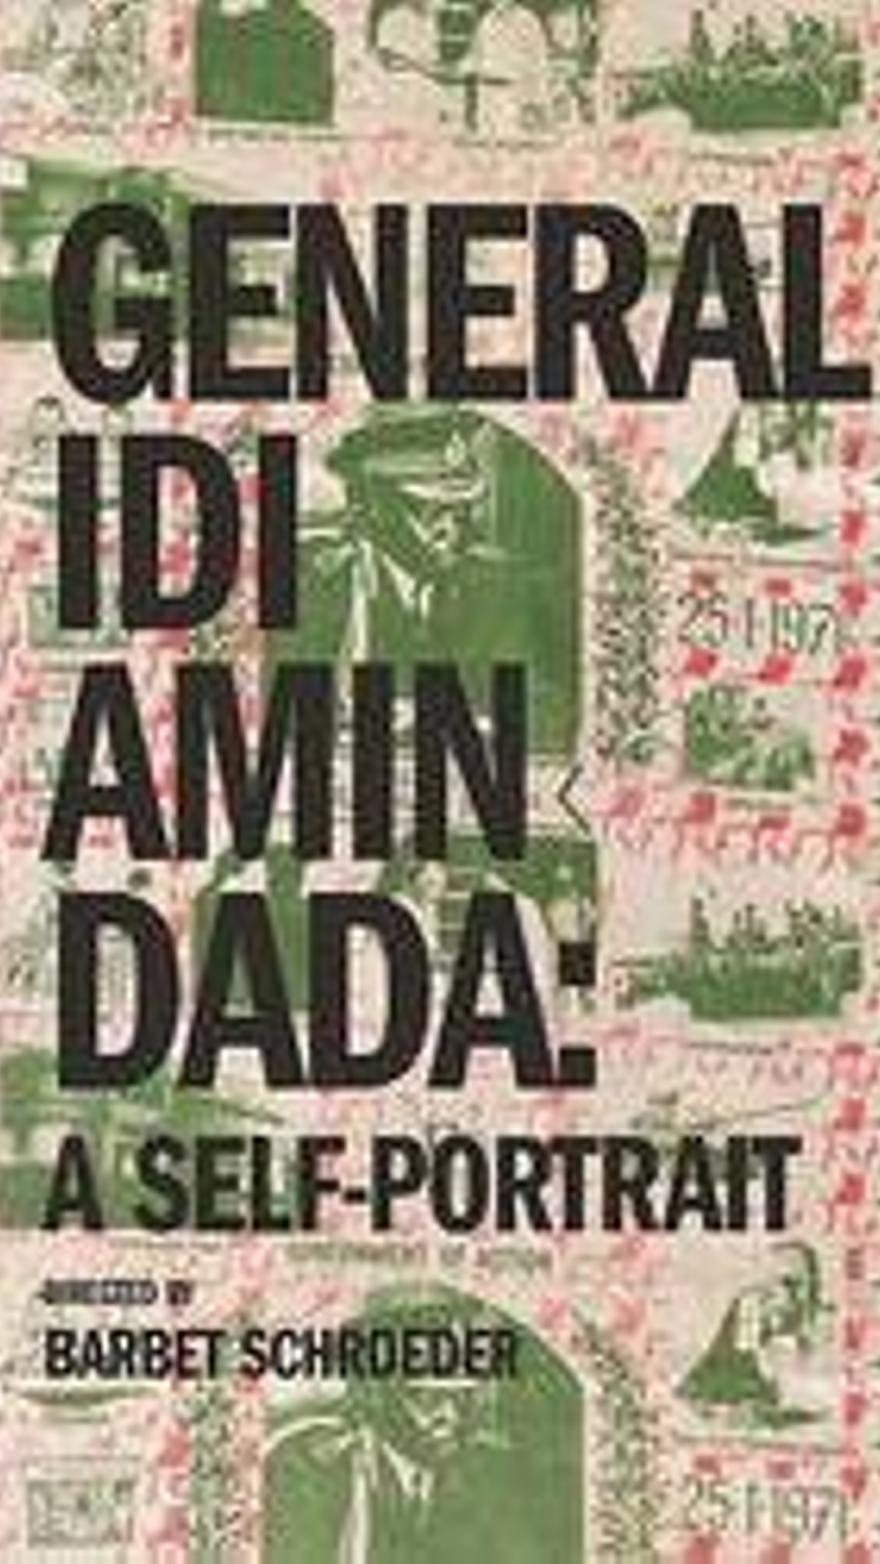 Général Idi Amin Dada: Autoportrait